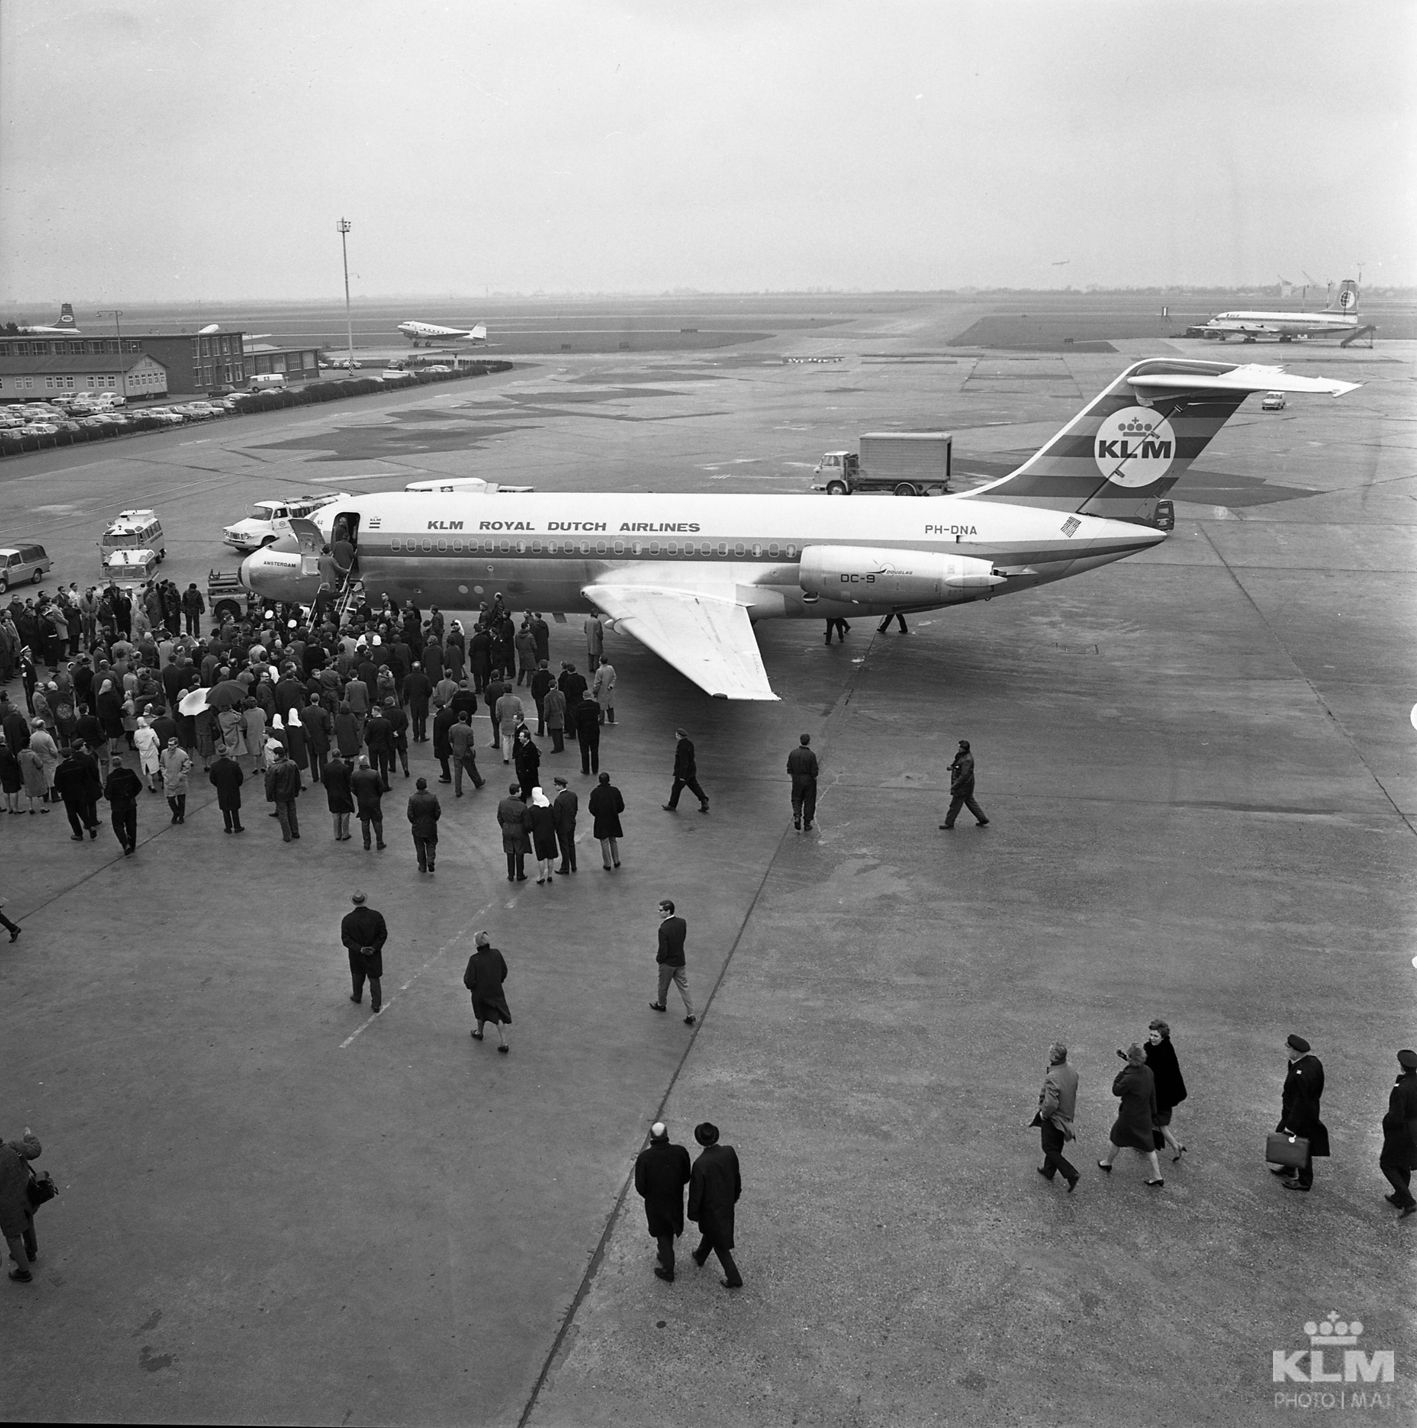 KLM DC-9